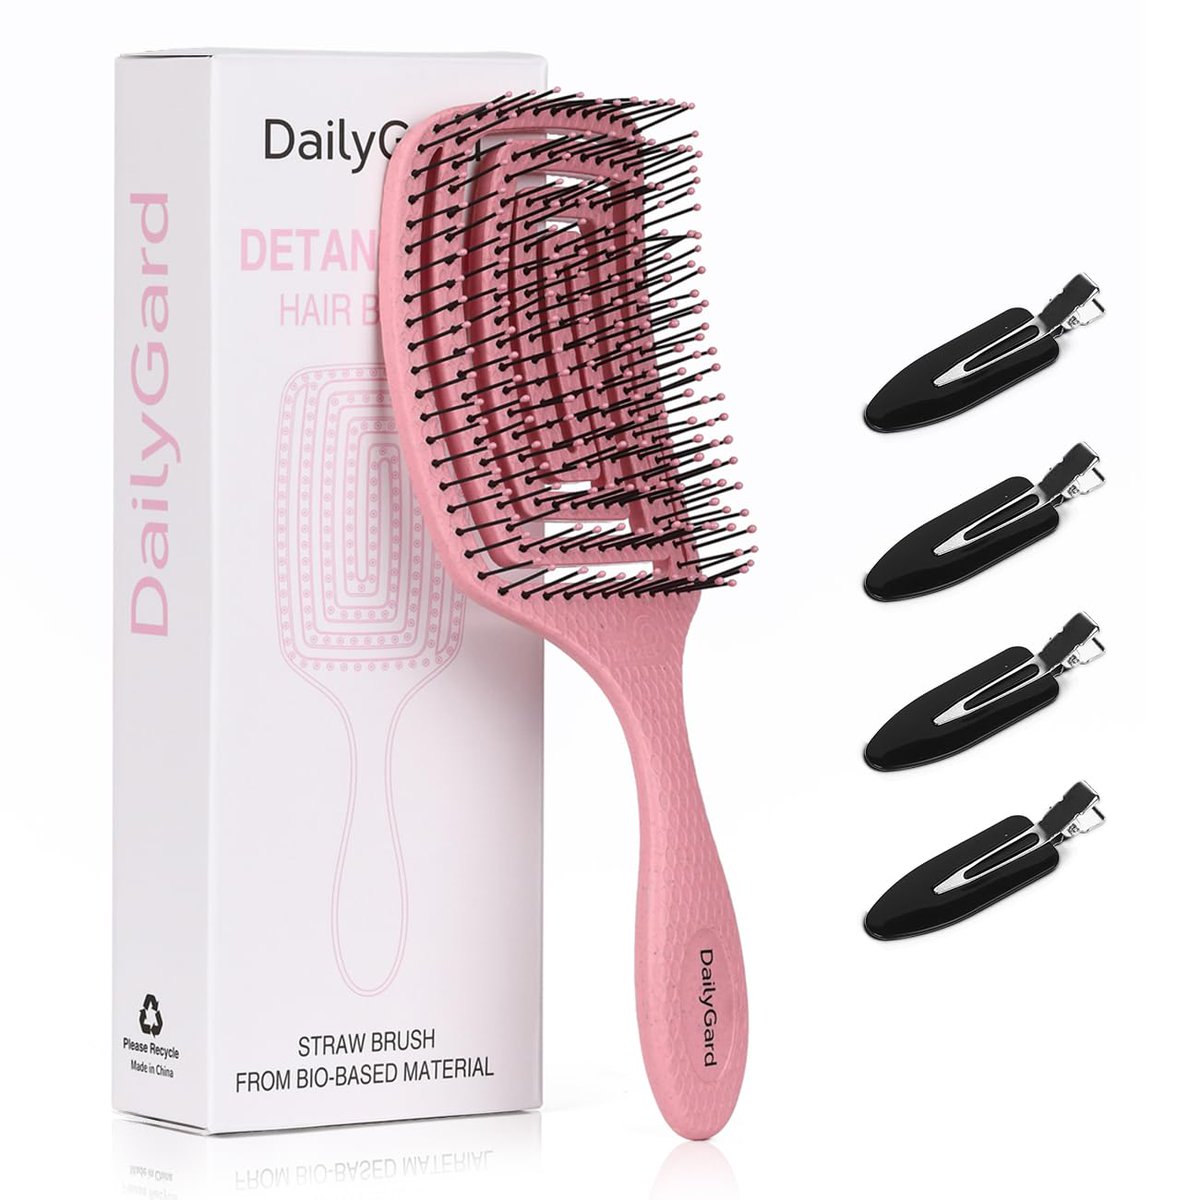 Daily Gard Detangling Brush, Dry and Wet Vented Detangler Hair Brush for Women and Men, for $6.7, Retail-$14.99

5% Coupon + 50% with promo code 50RJHPER

 amzn.to/4biLVWo #JJD